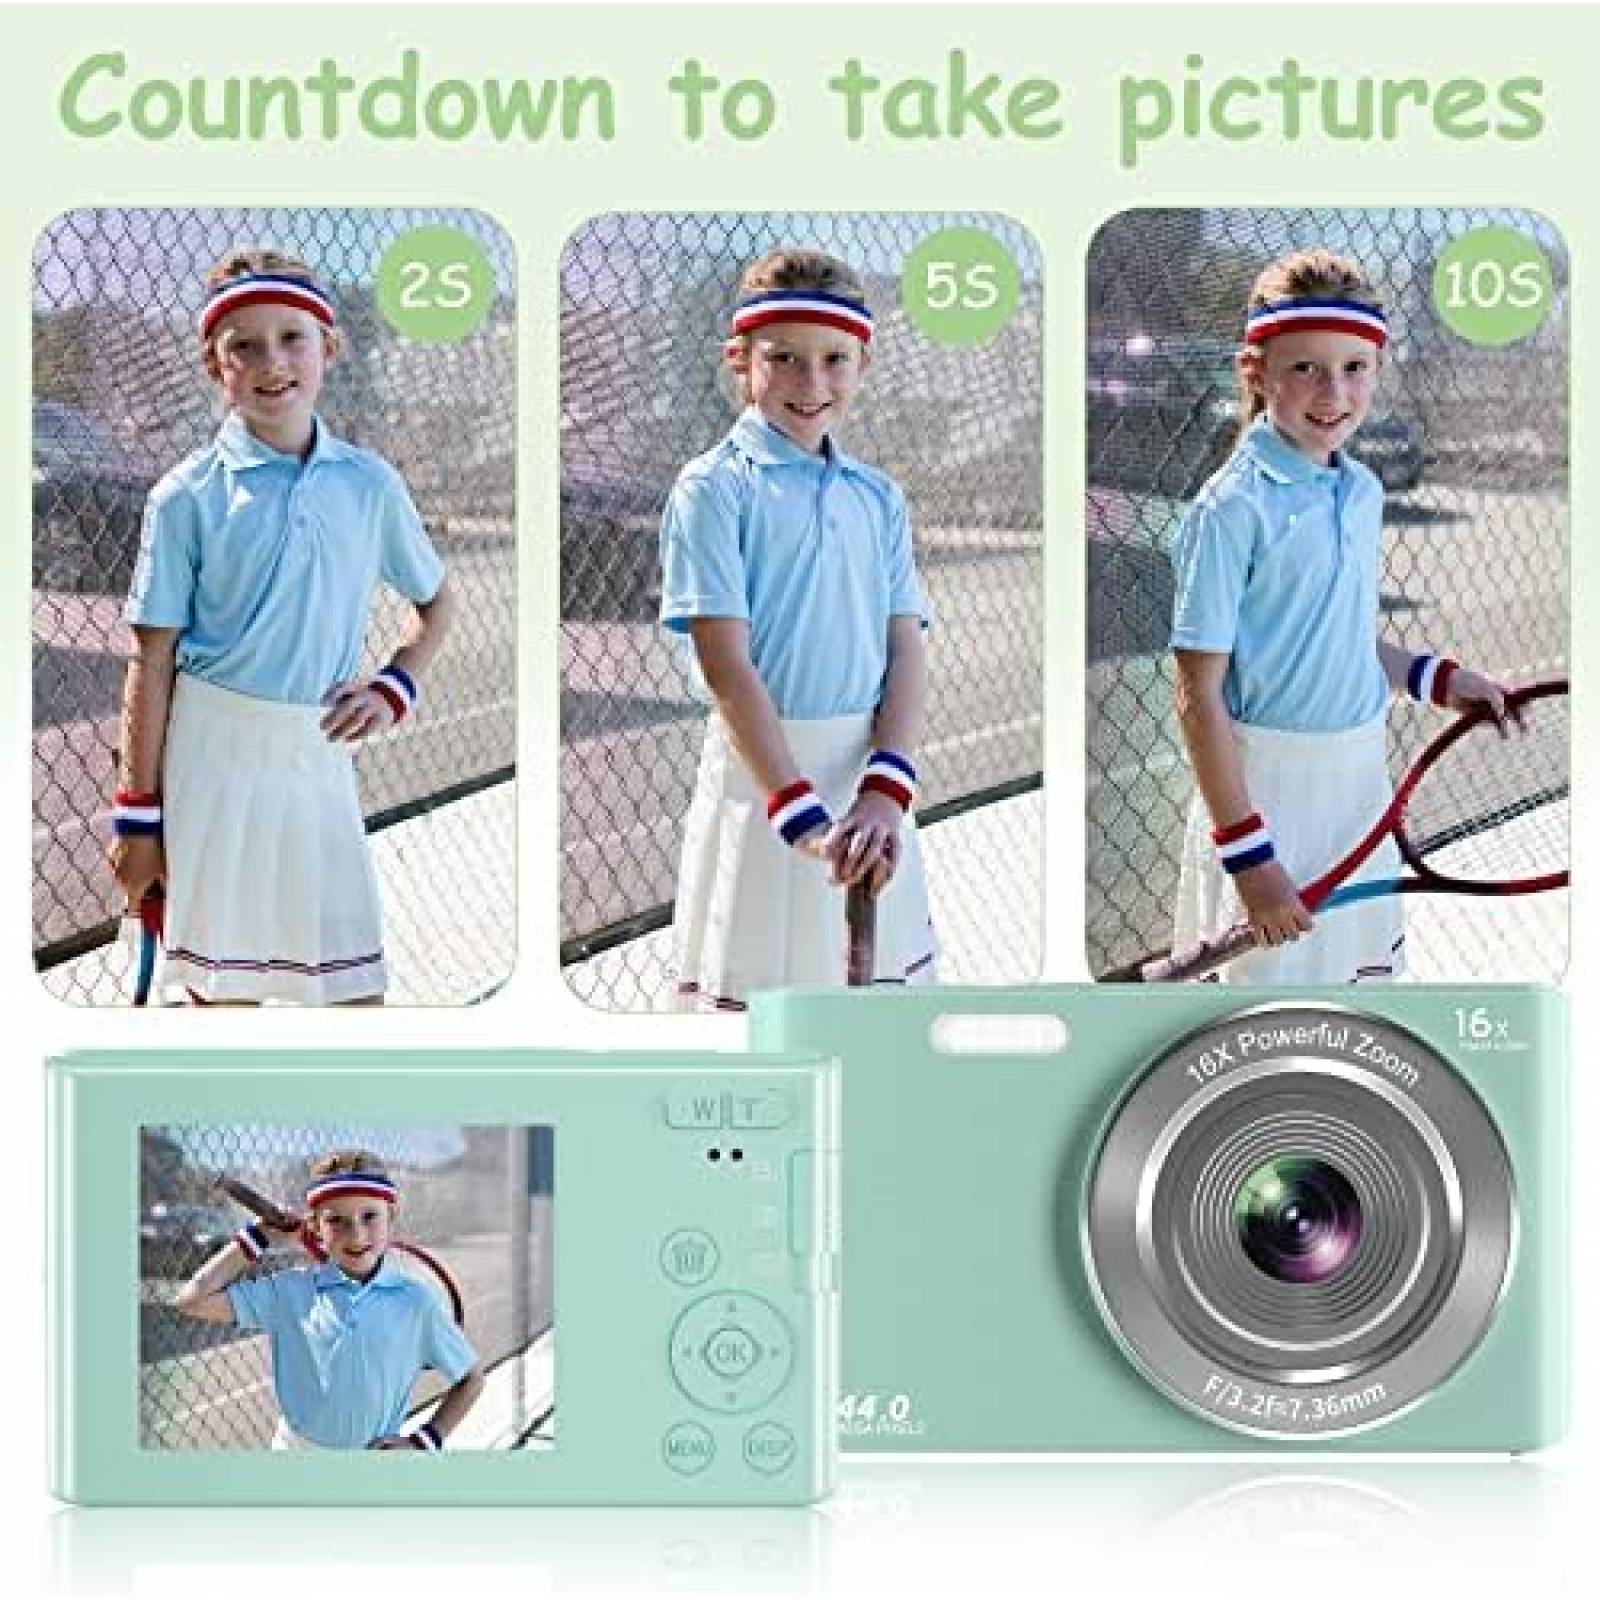 Cámara digital, cámara digital para niños 4K 44MP con tarjeta SD